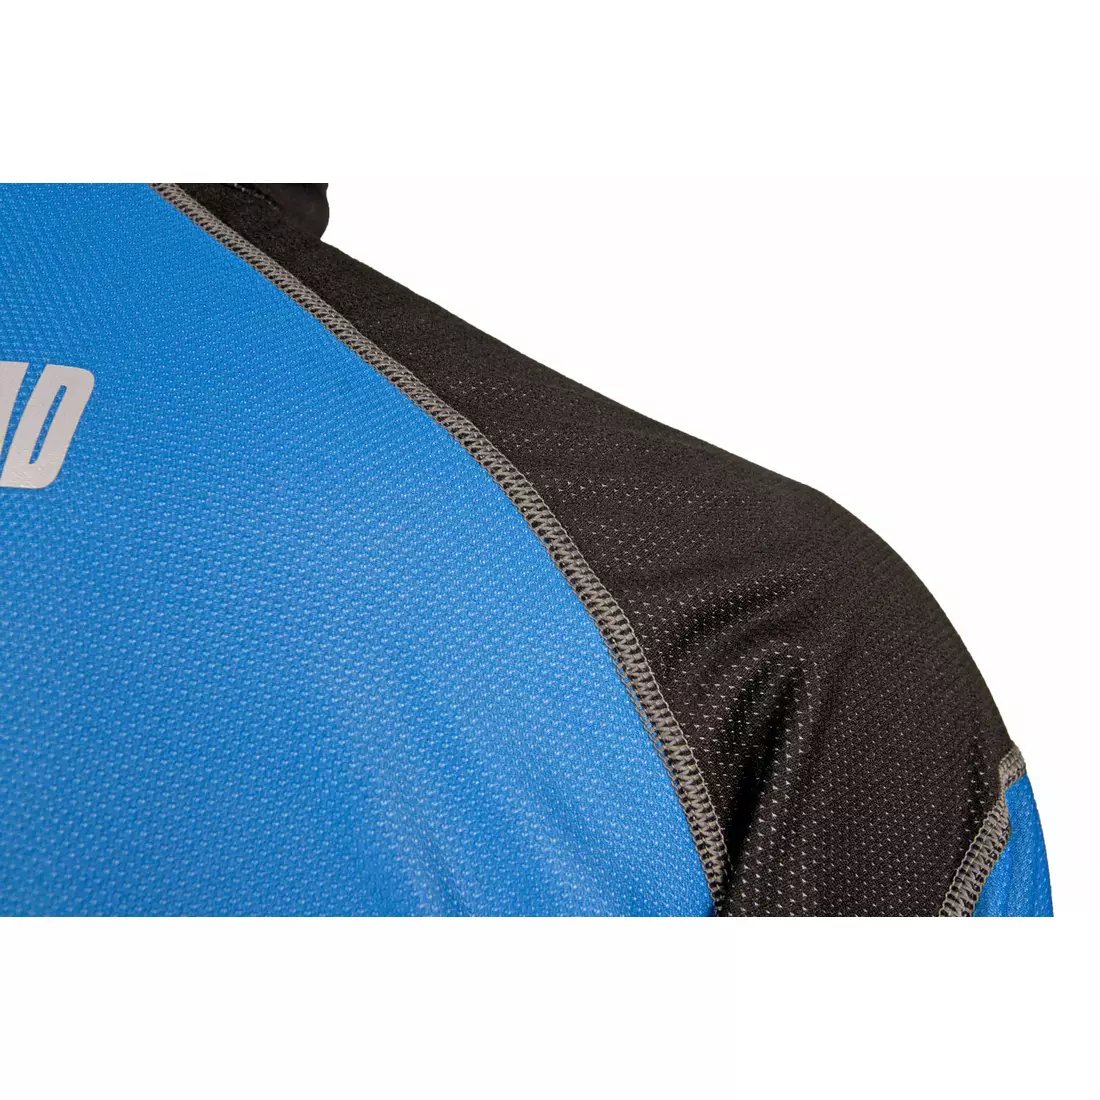 Zimní cyklistická bunda CROSSROAD FREEPORT, modrá